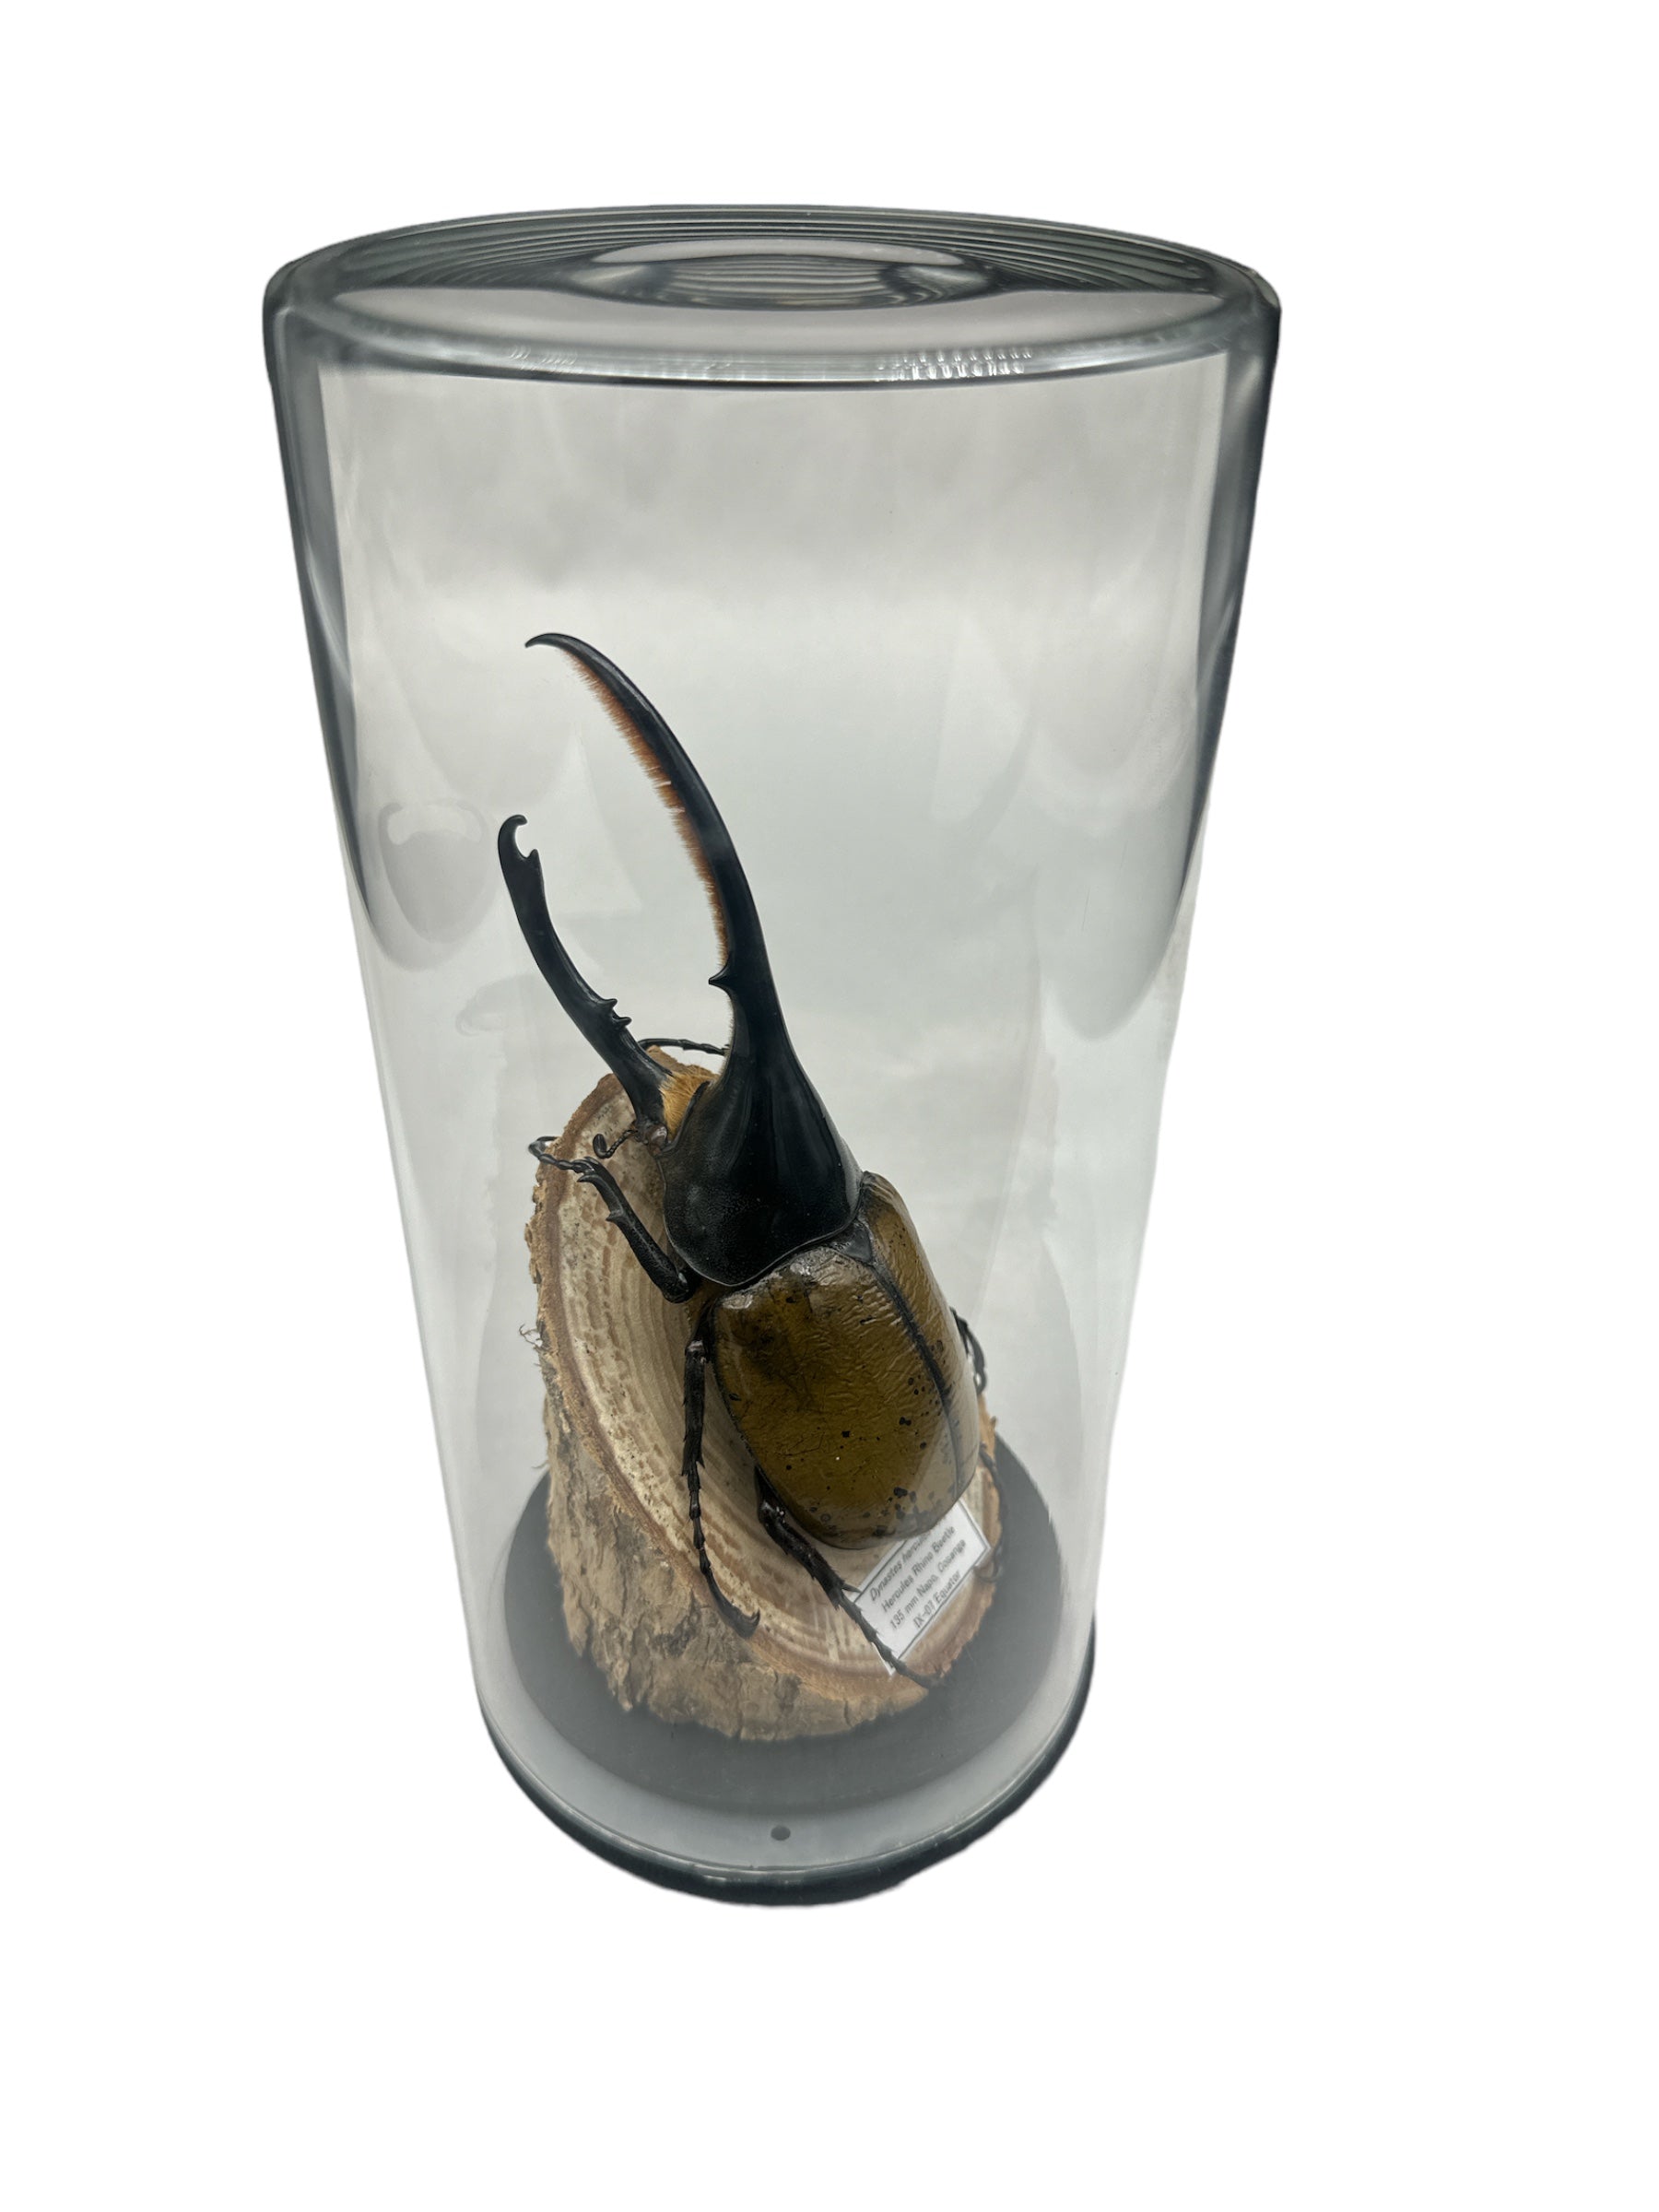 Hercules Beetle (Dynastes hercules) - Glass Dome - Large